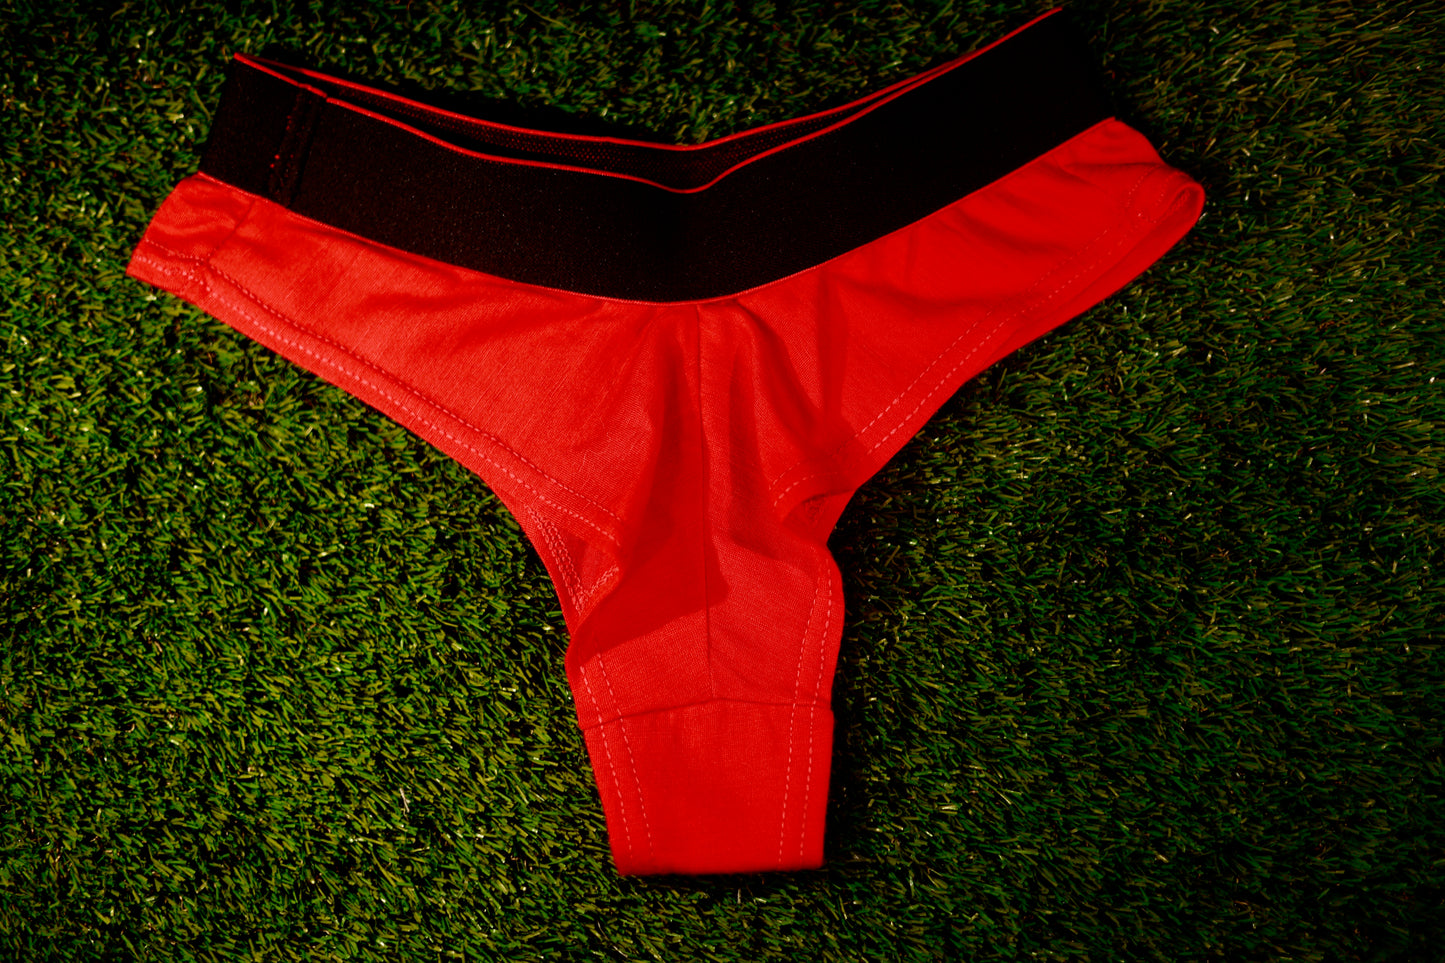 Underwear Women’s Red Merino by ELZI